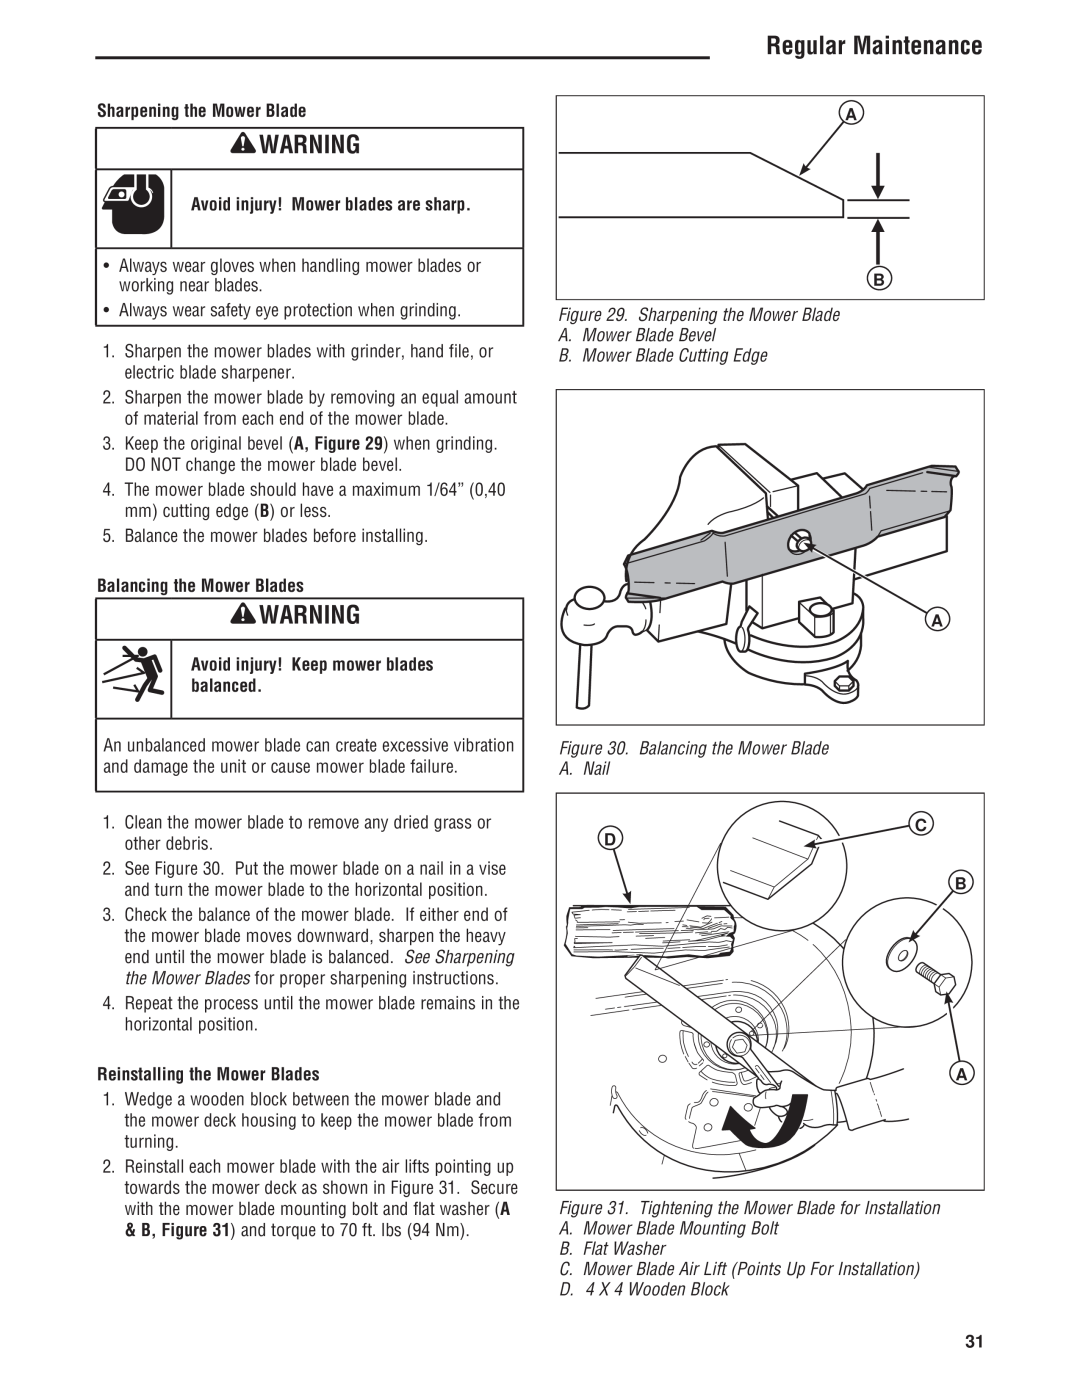 Simplicity 5101604, 543777-0113-E1 Regular Maintenance, Sharpening the Mower Blade, Avoid injury! Mower blades are sharp 